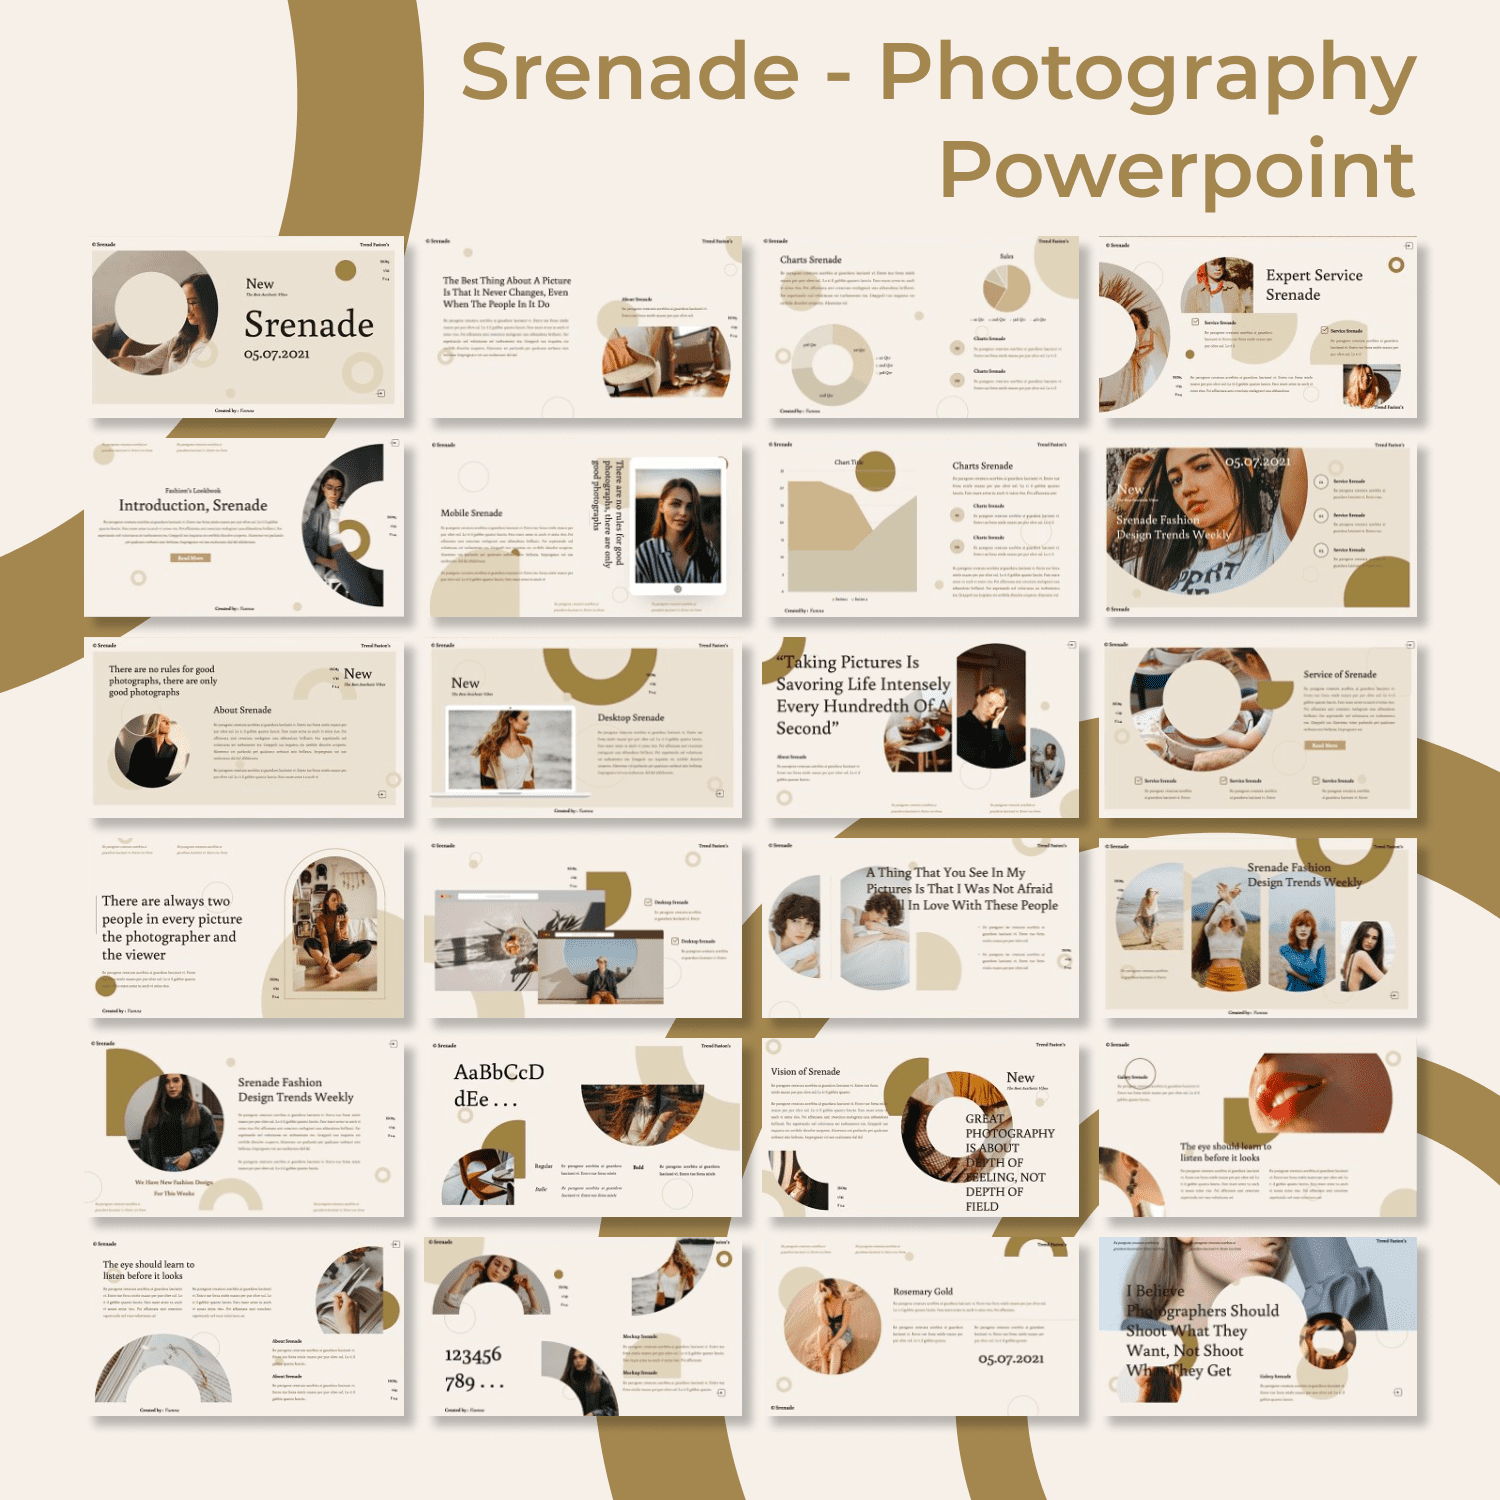 Srenade - Photography Powerpoint by MasterBundles.